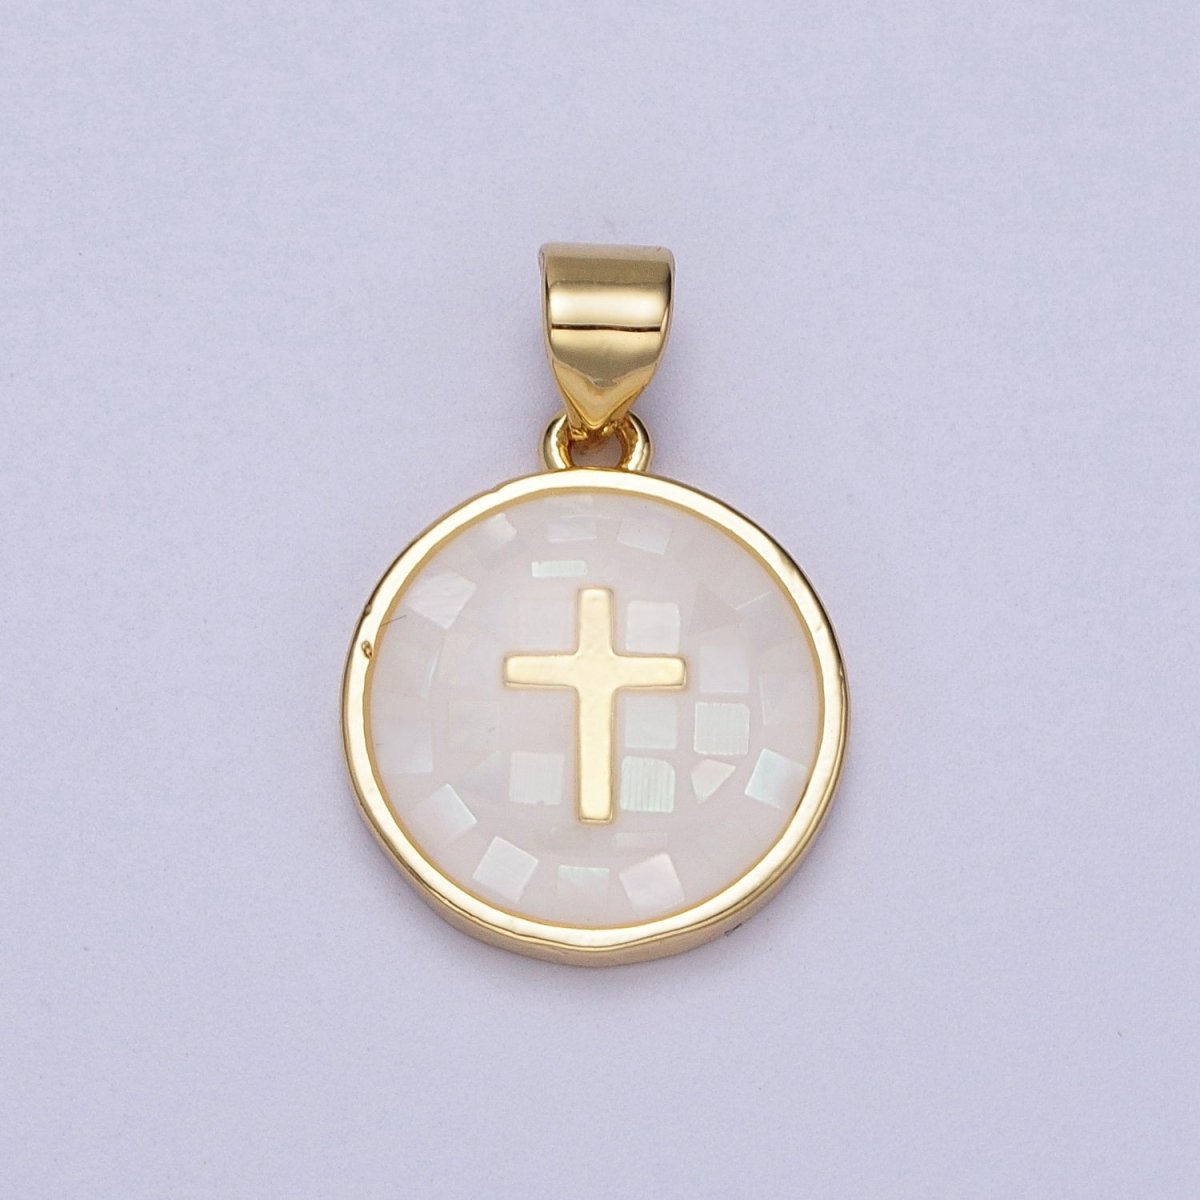 Gold Religious Cross Pink, White, Teal, Abalone, Green Shell Opal Round Pendant I-075 I-829 I-847 I-881 I-887 - DLUXCA